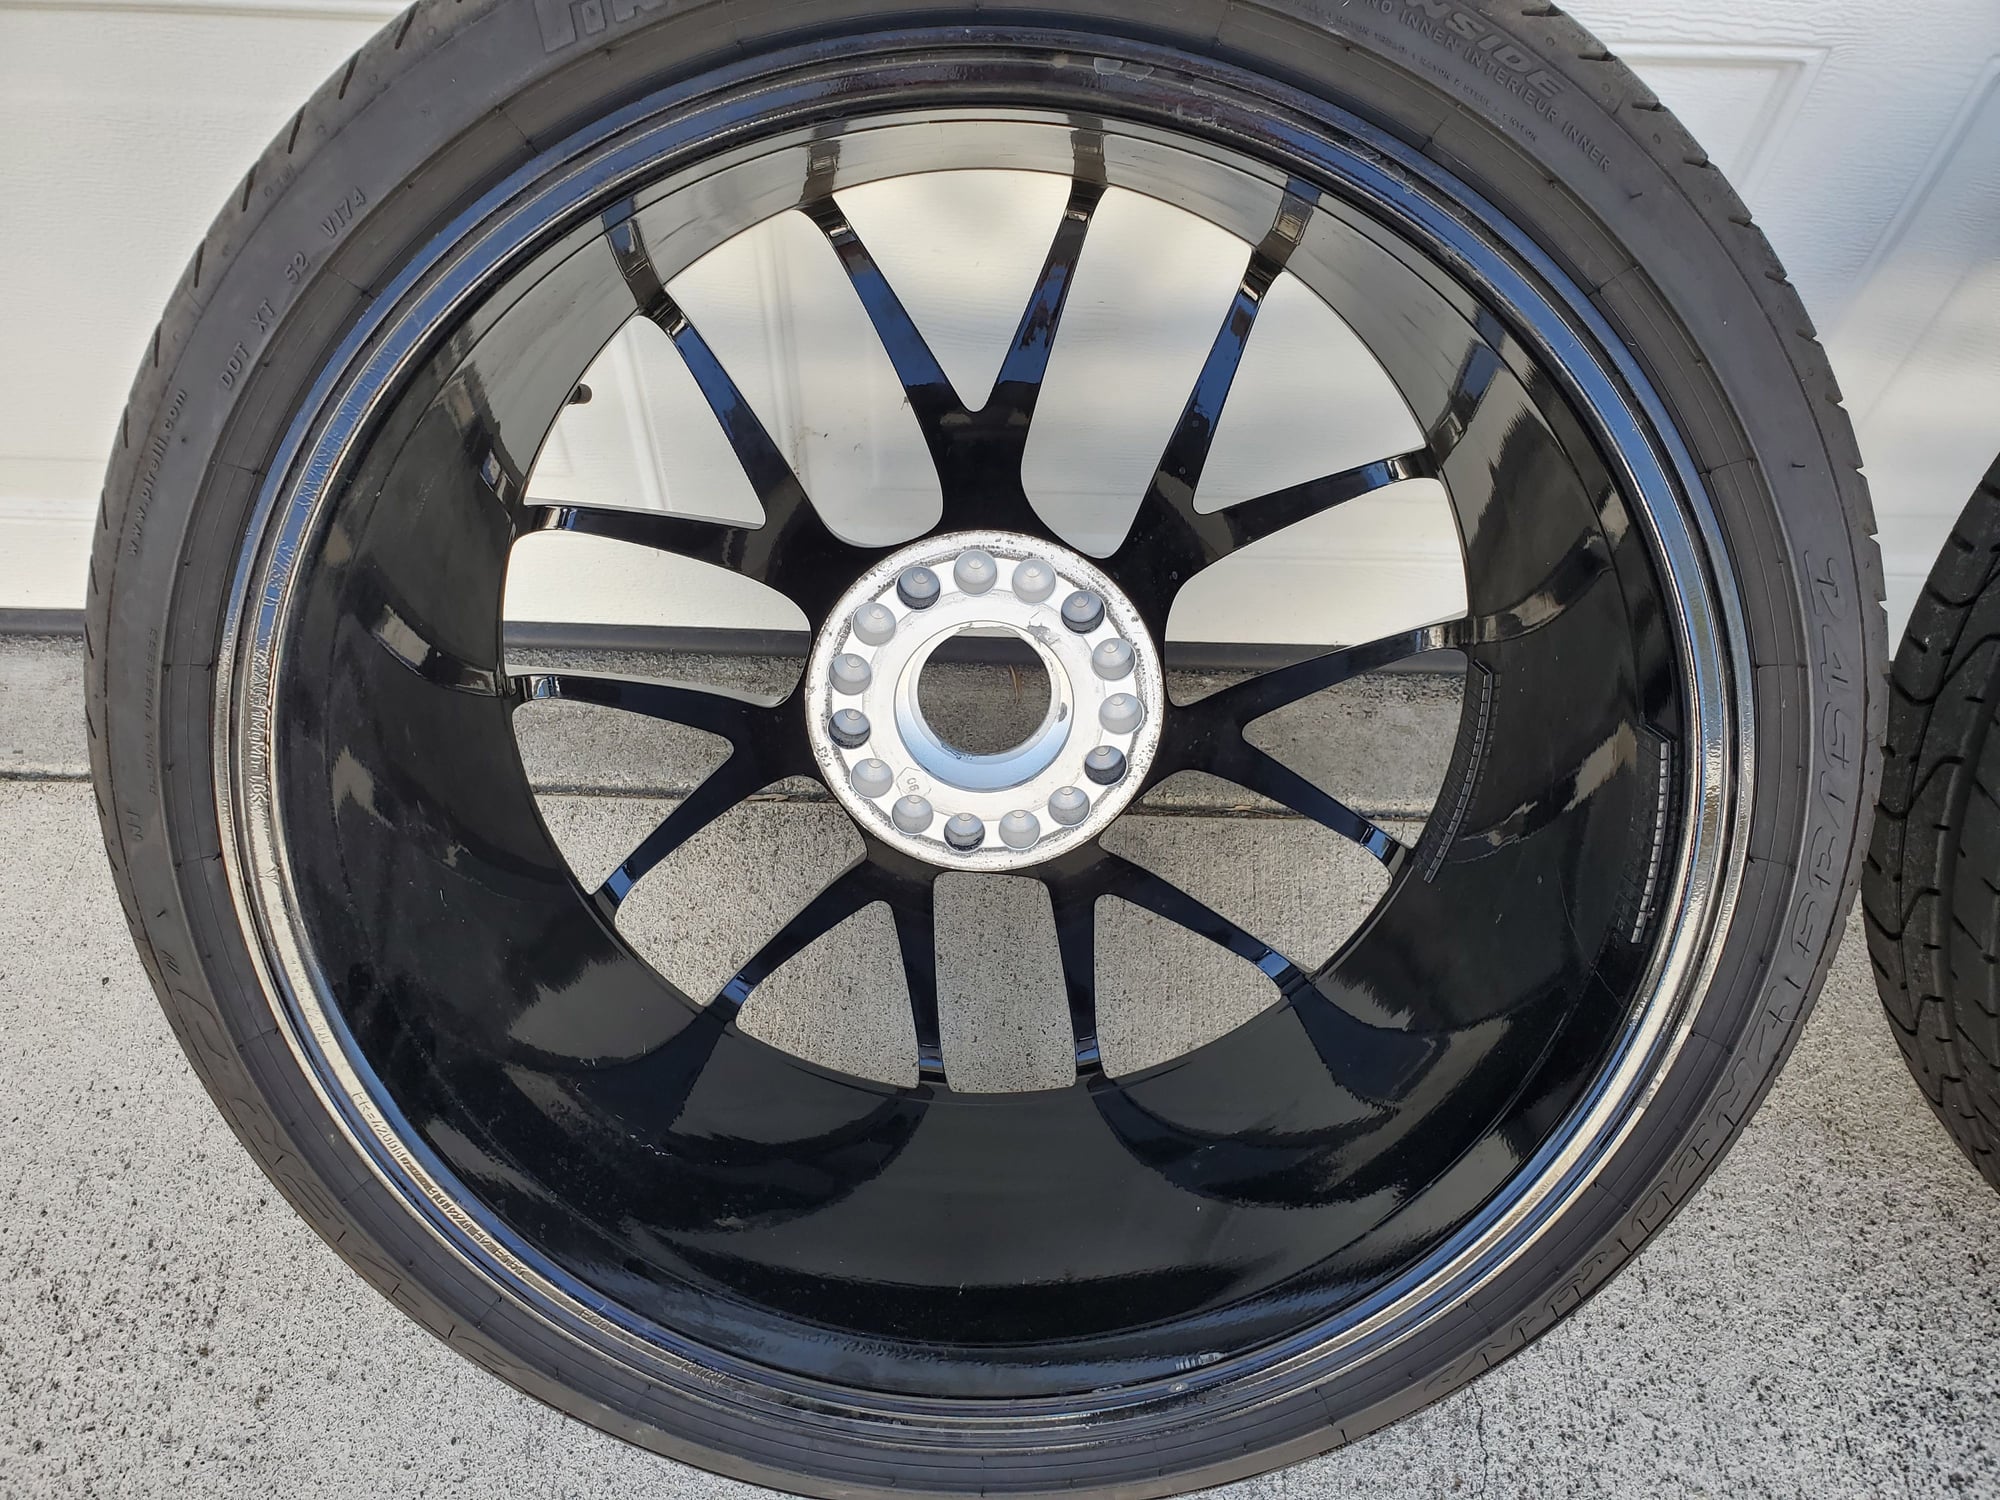 Wheels and Tires/Axles - 2019 PORSCHE 911 TURBO S (OEM) CENTERLOCK WHEELS WITH PIREELI P-ZERO TIRES (4K MILES) - Used - 2013 to 2020 Porsche 911 - Laguna Niguel, CA 92677, United States